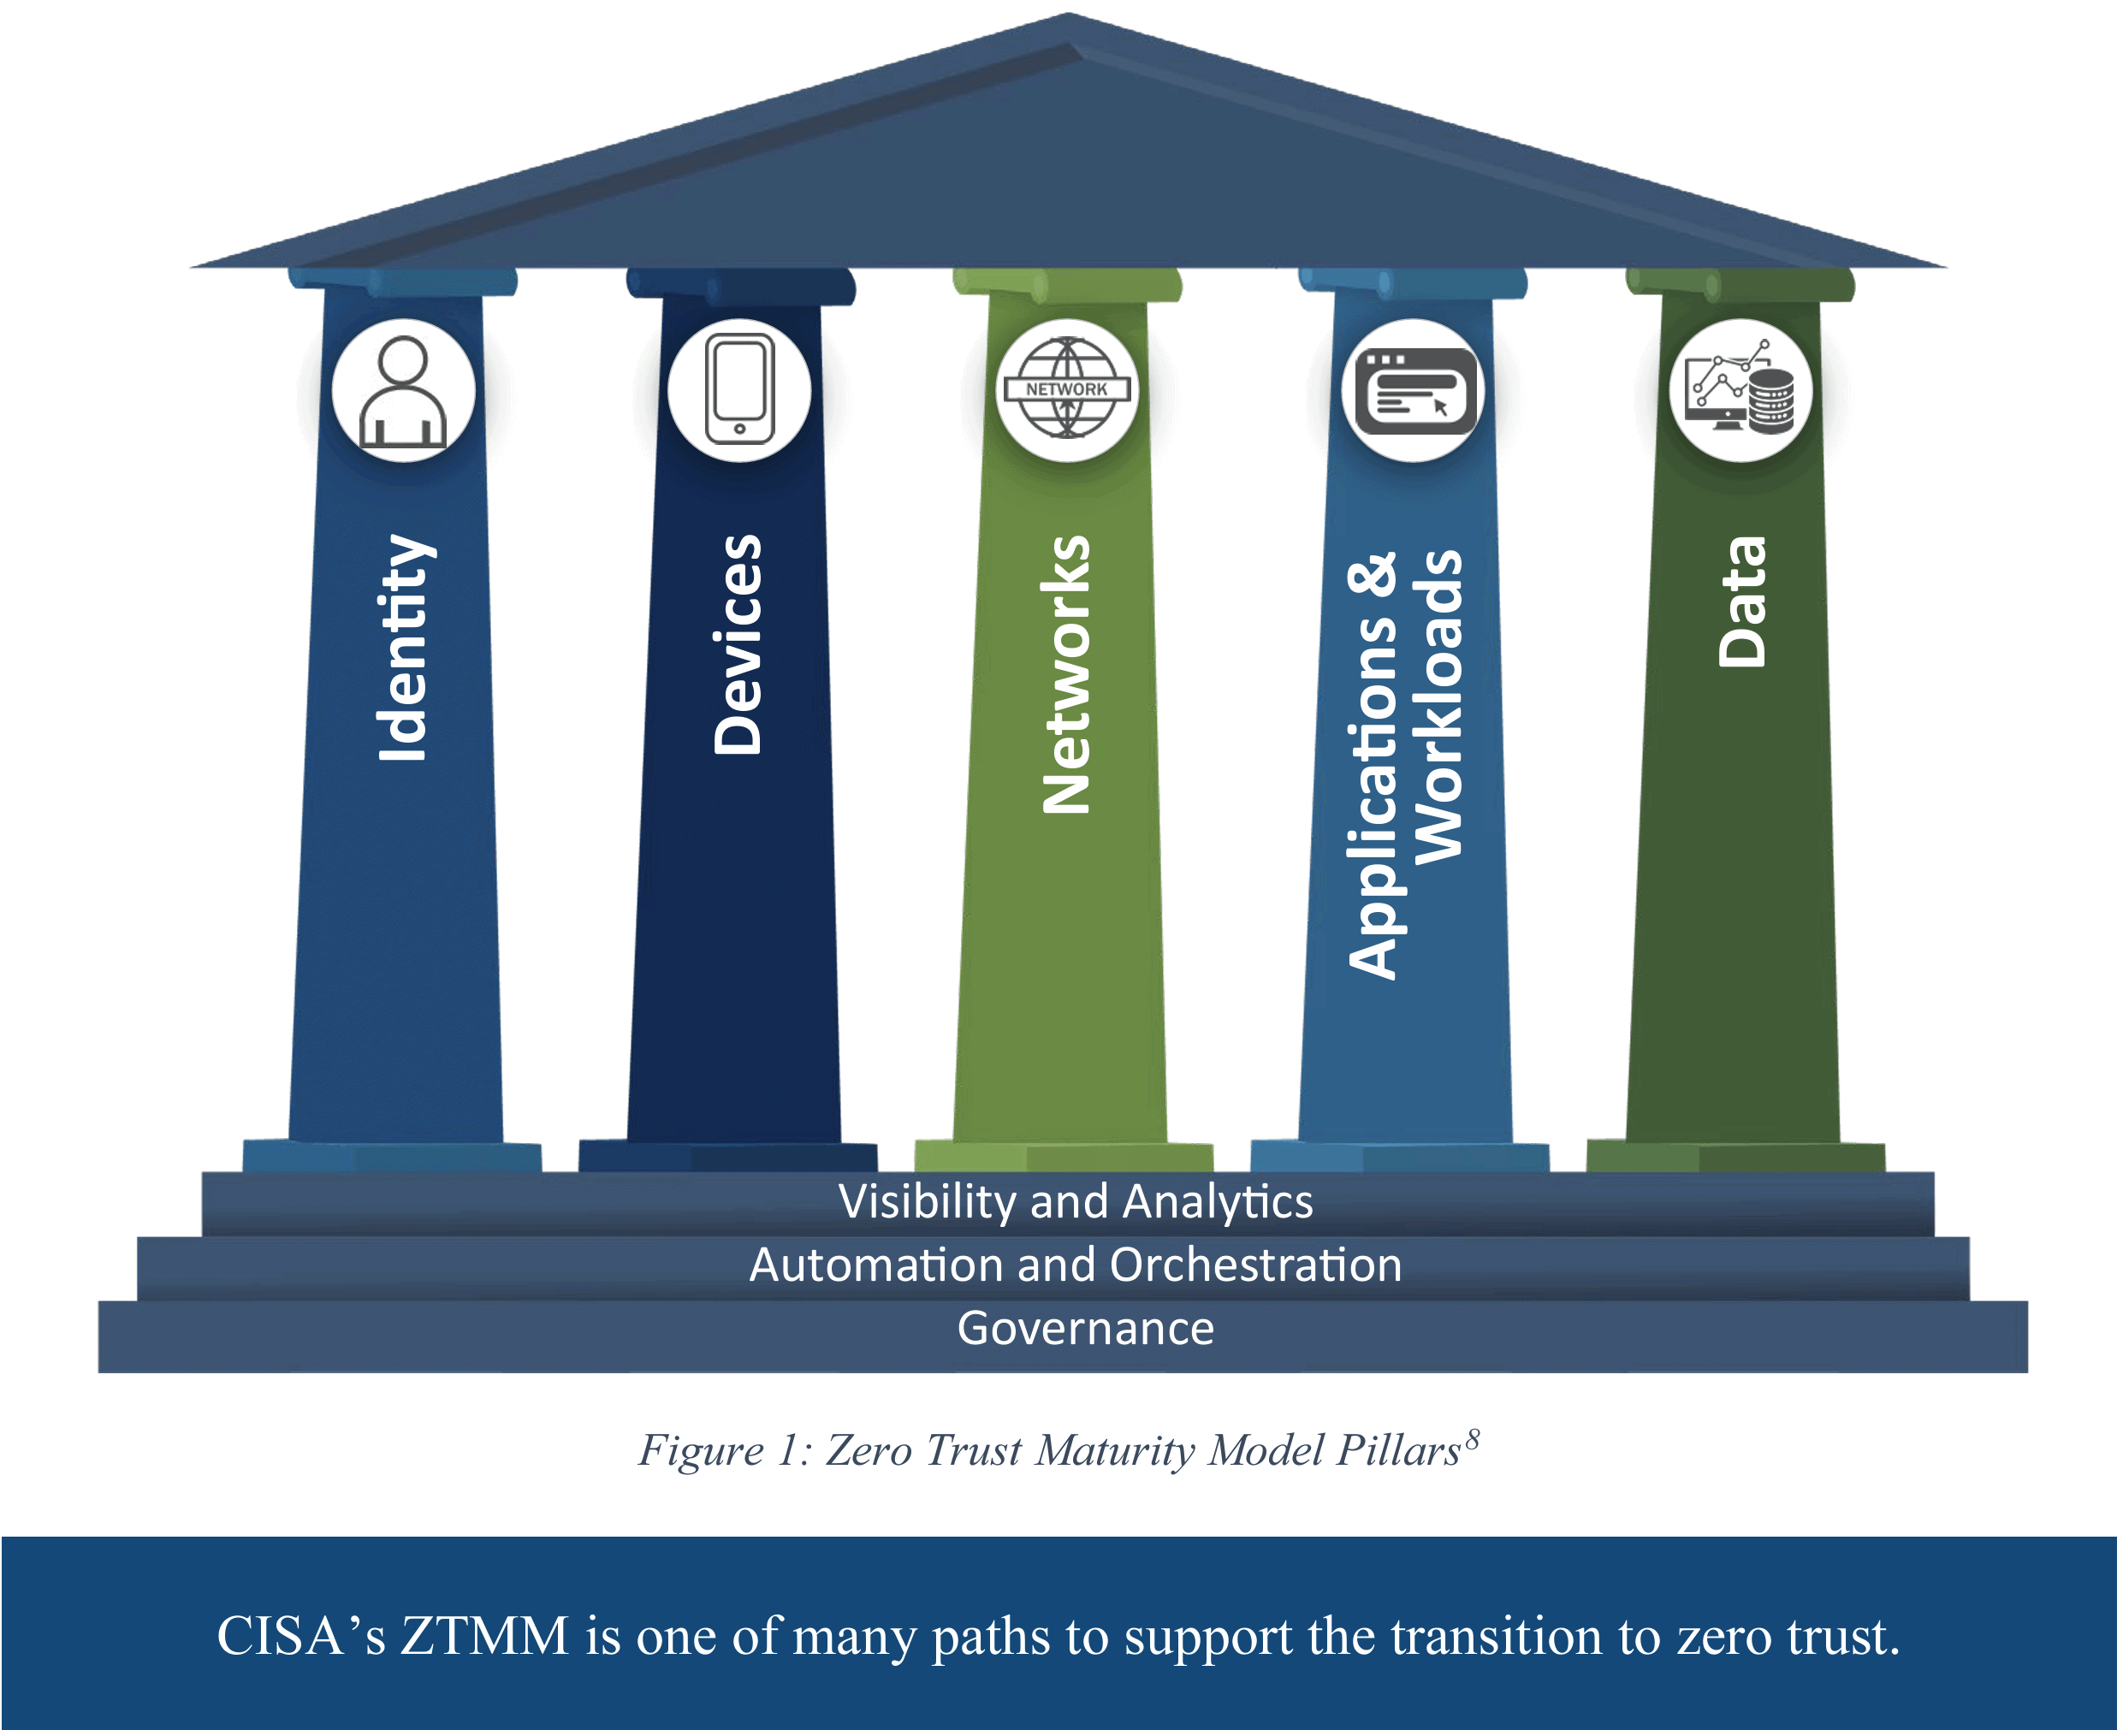 CISA's Zero Trust Maturity Model Pillars